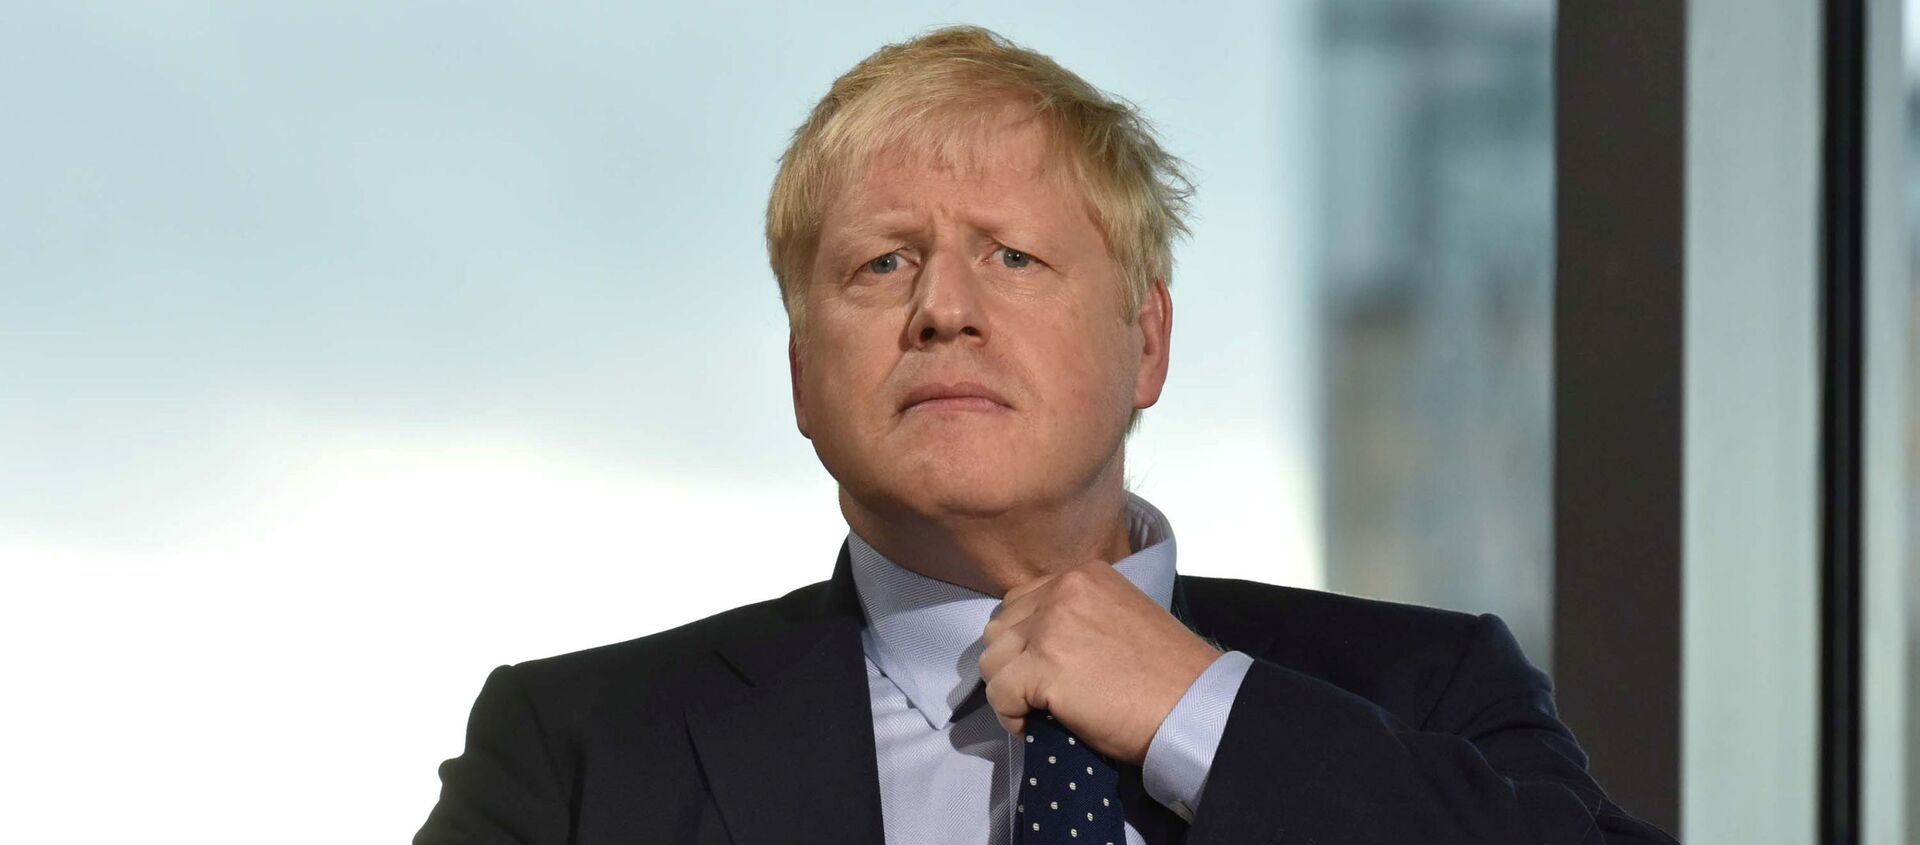 Britain's Prime Minister Boris Johnson appears on BBC TV's The Andrew Marr Show in Salford, Manchester, Britain, September 29, 2019 - Sputnik International, 1920, 30.09.2019